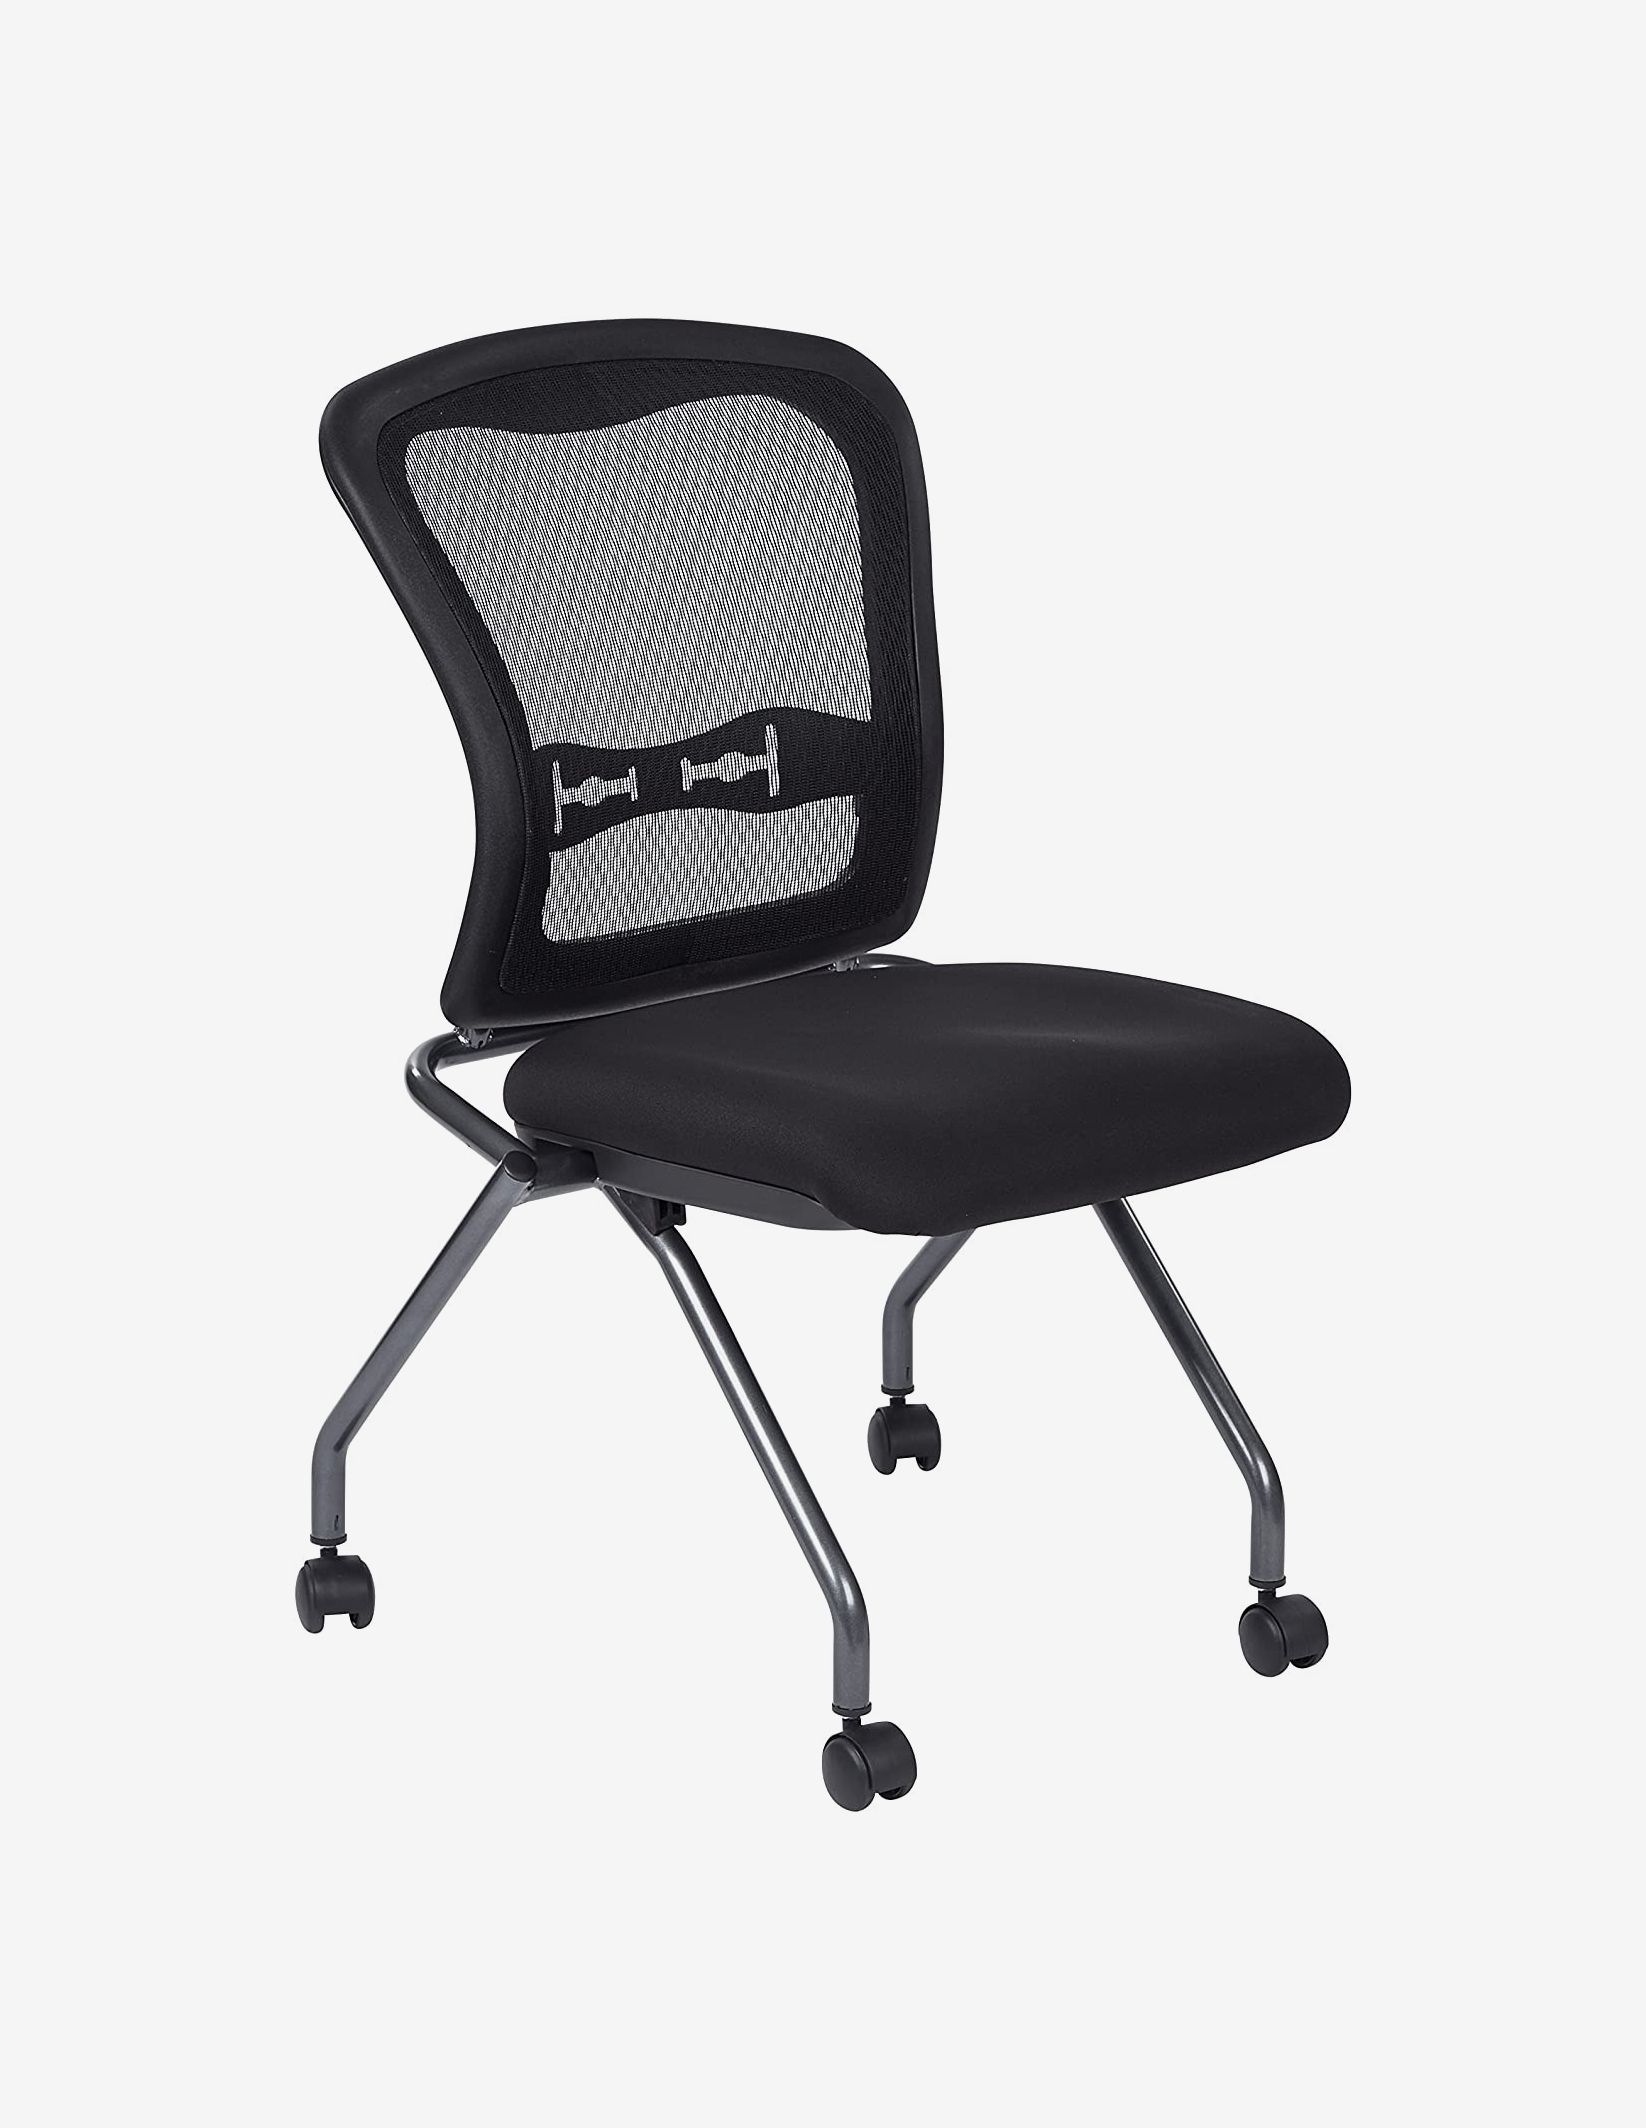 Best Foldable Ergonomic Desk Chairs, Flip Down Desk Chairs